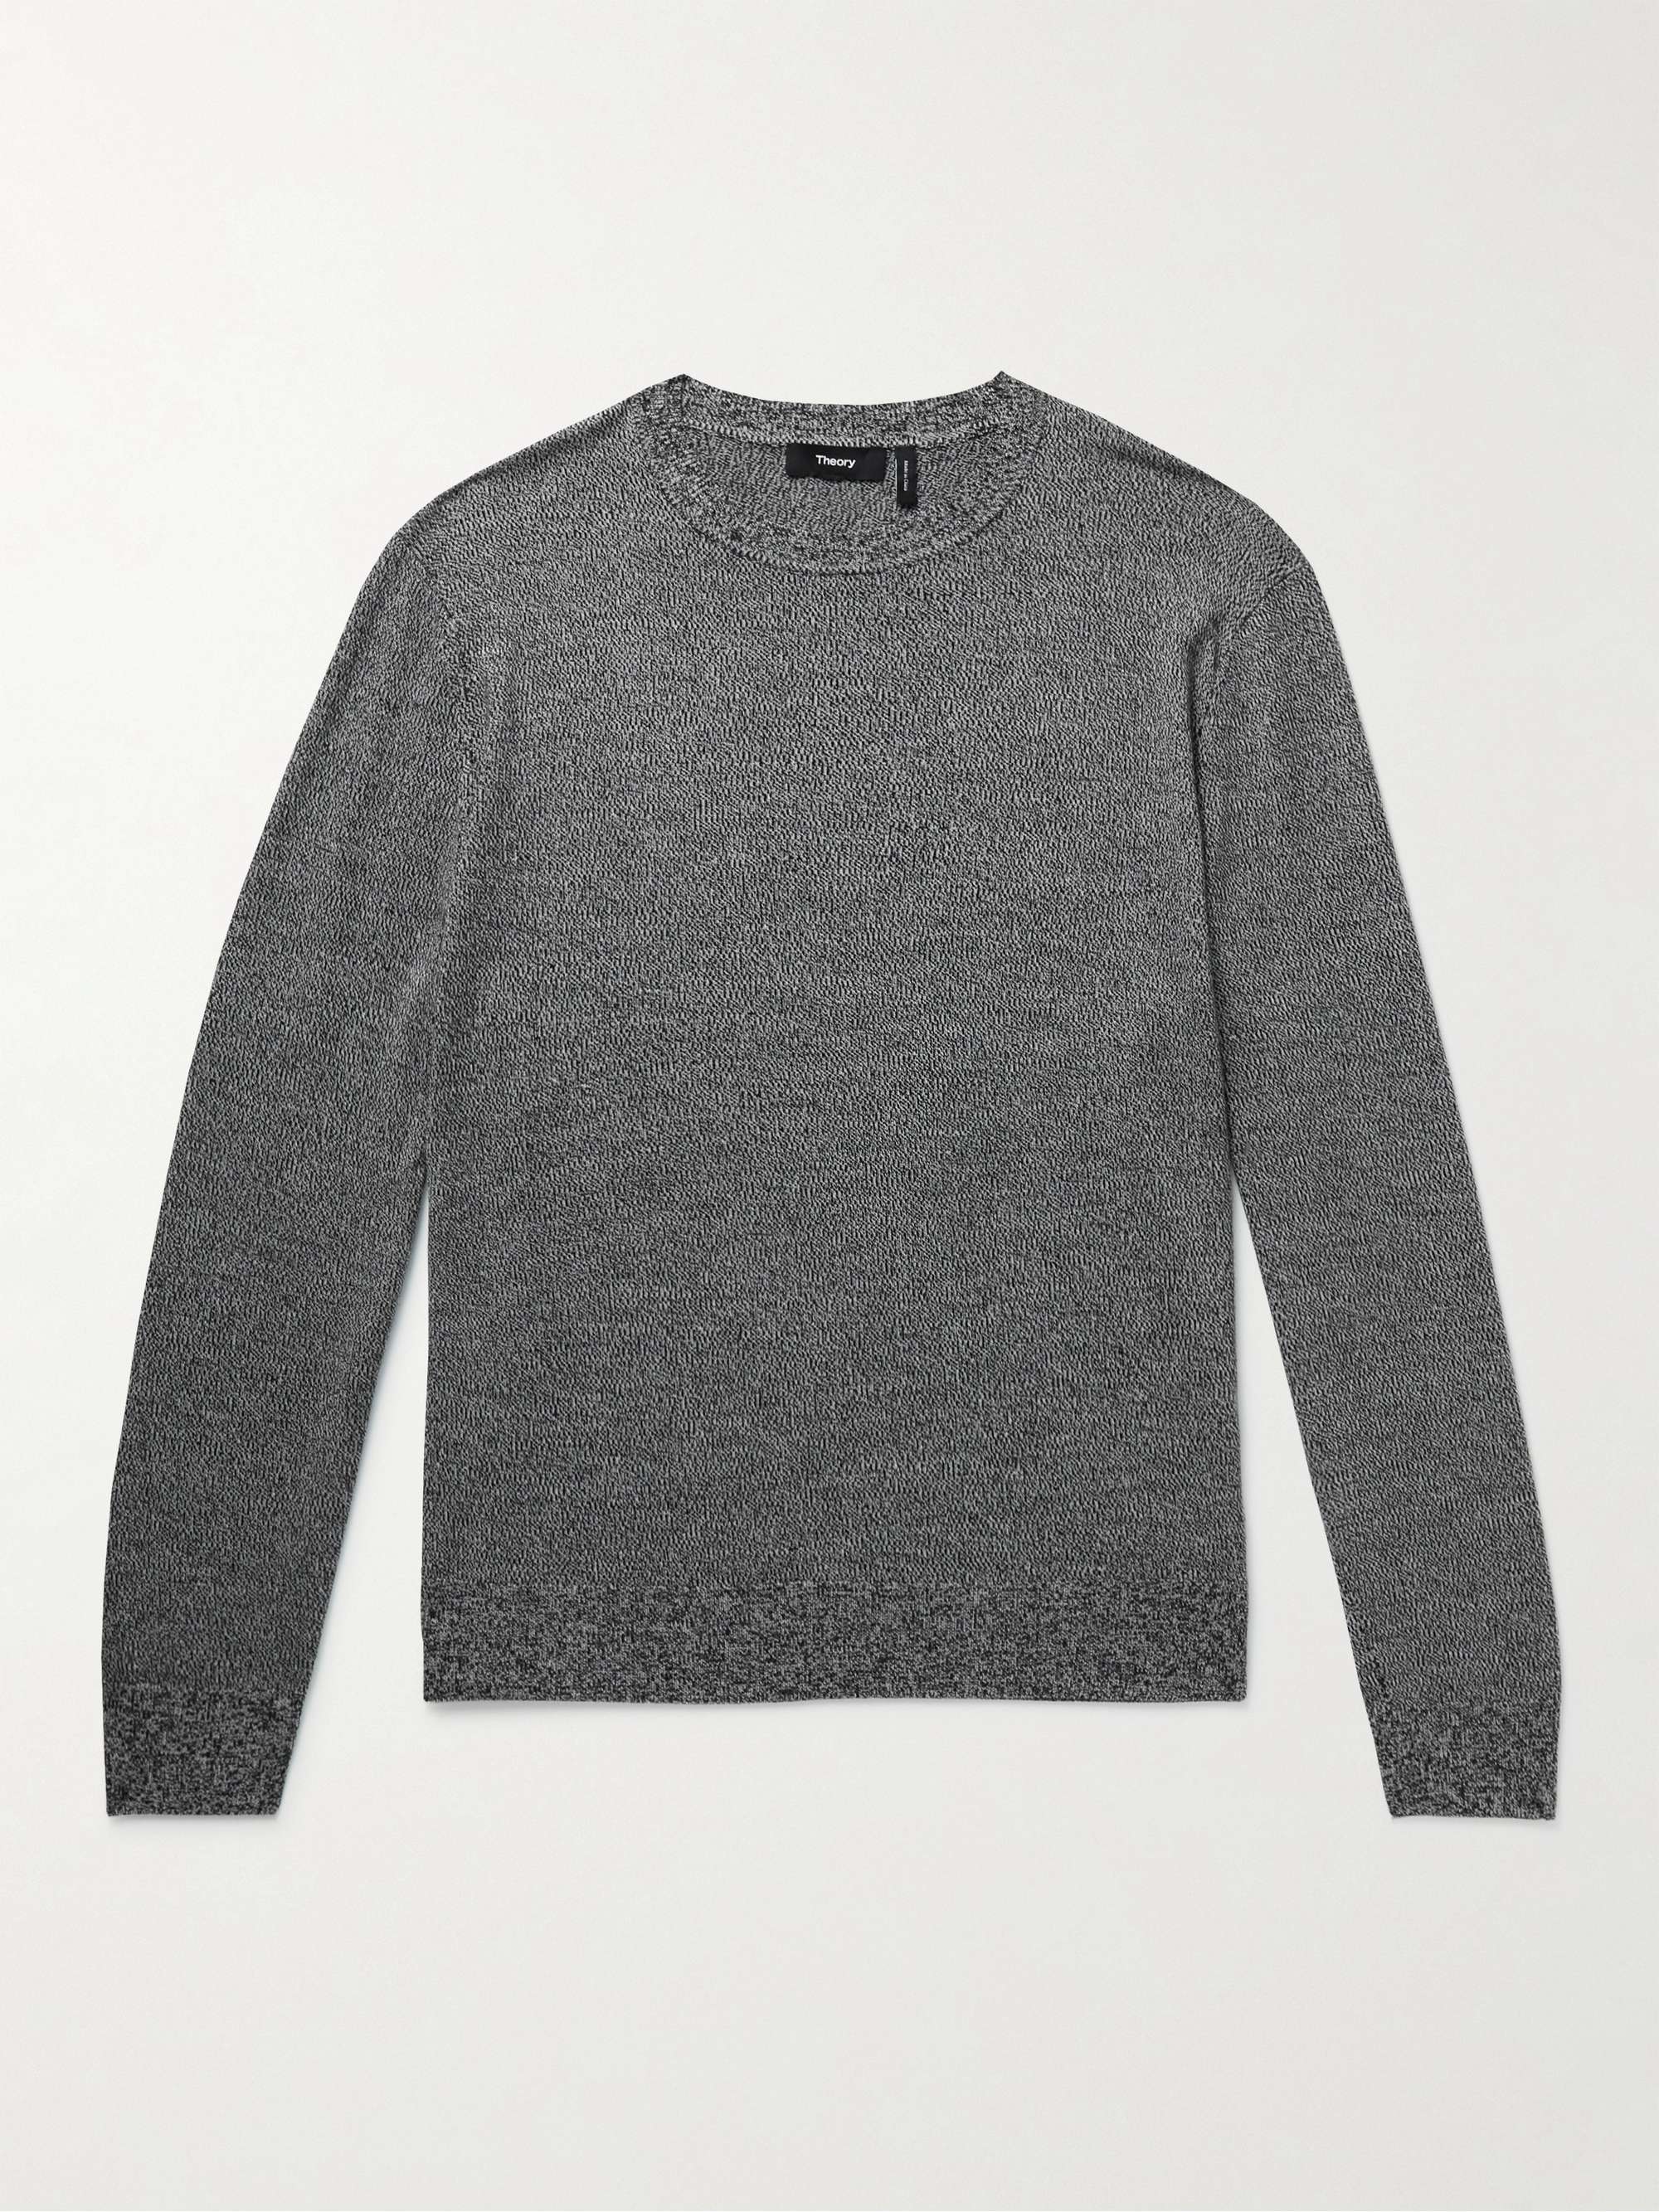 THEORY Merino Wool Sweater for Men | MR PORTER